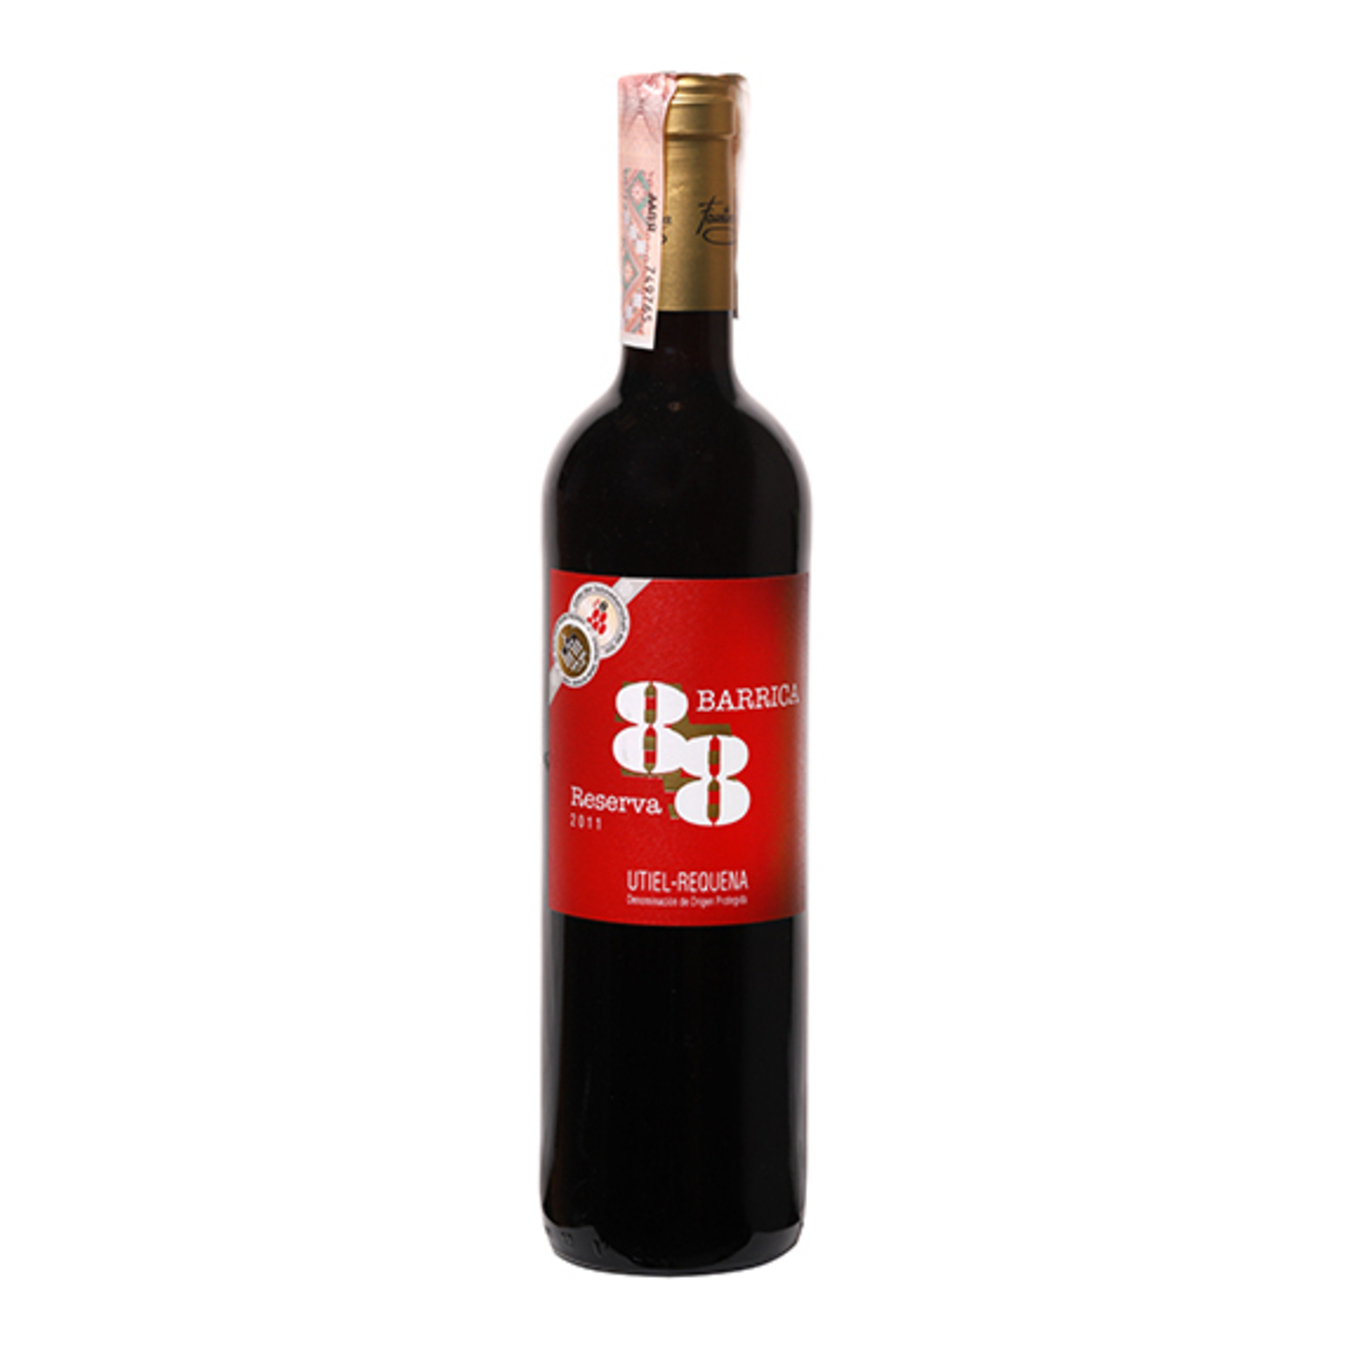 Вино Barrica 88 Reserva Utiel-Requena червоне сухе 13% 0,75л